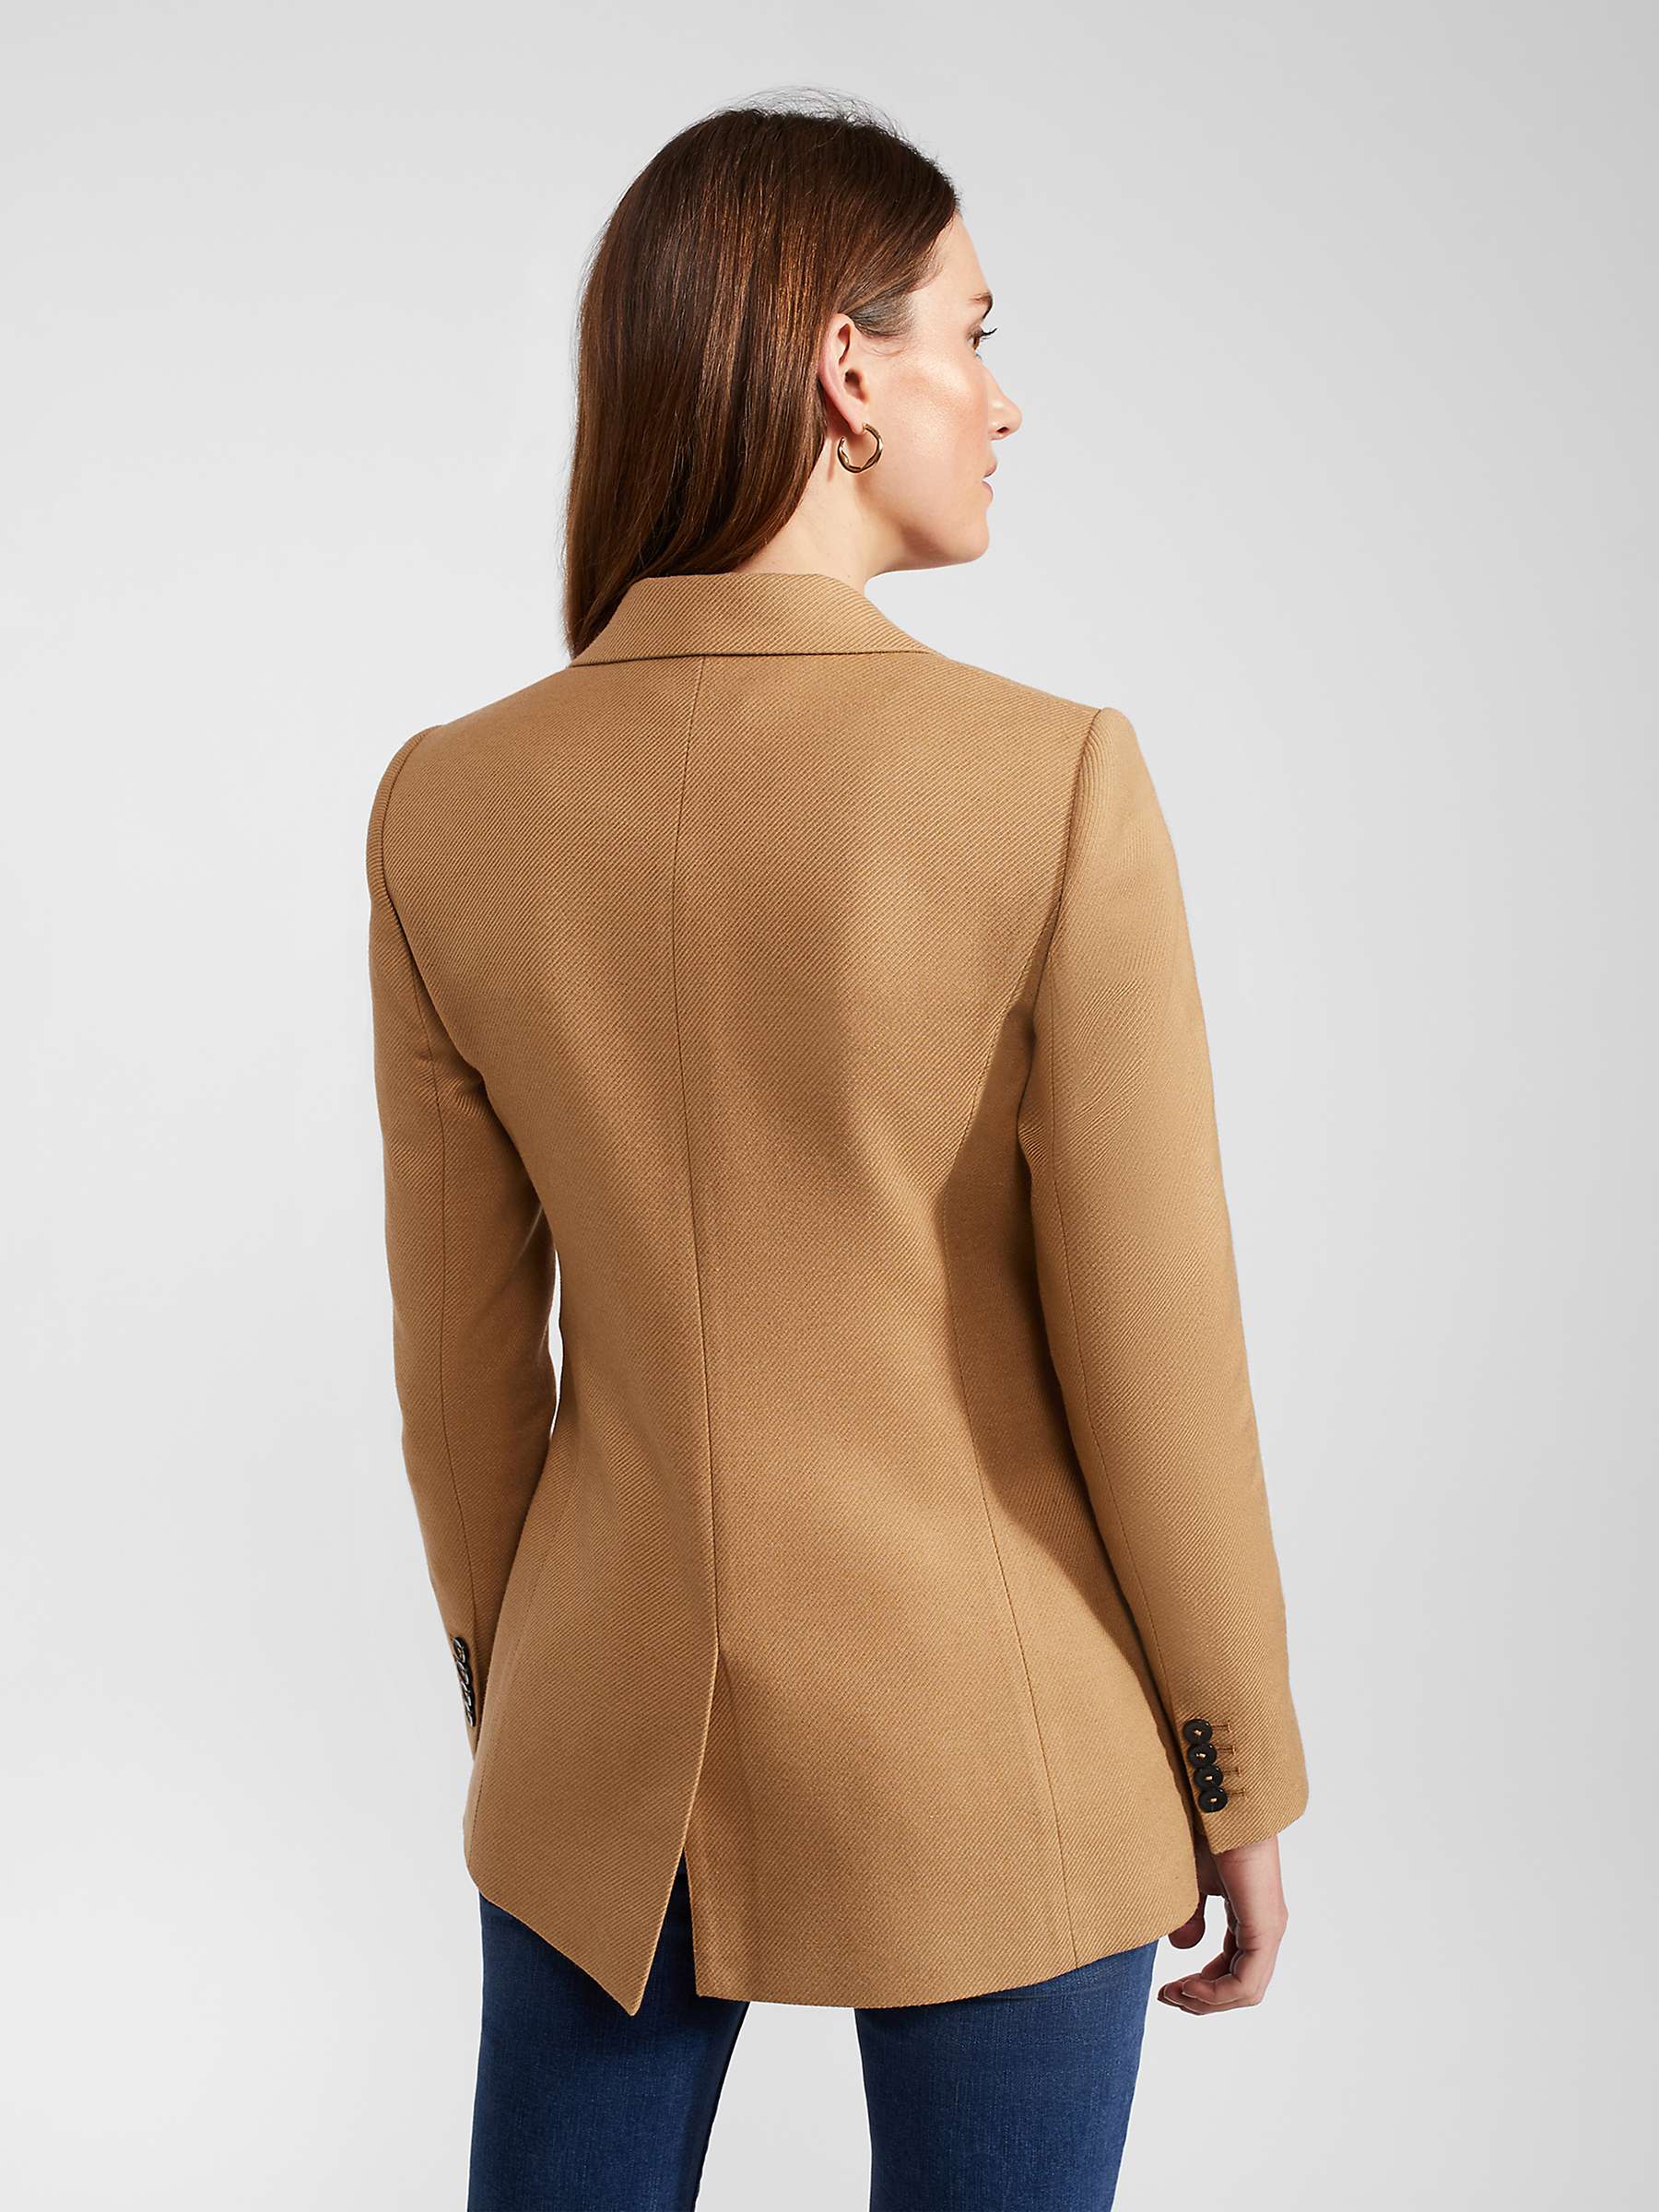 Buy Hobbs Digby Tailored Wool Blend Jacket, Camel Online at johnlewis.com